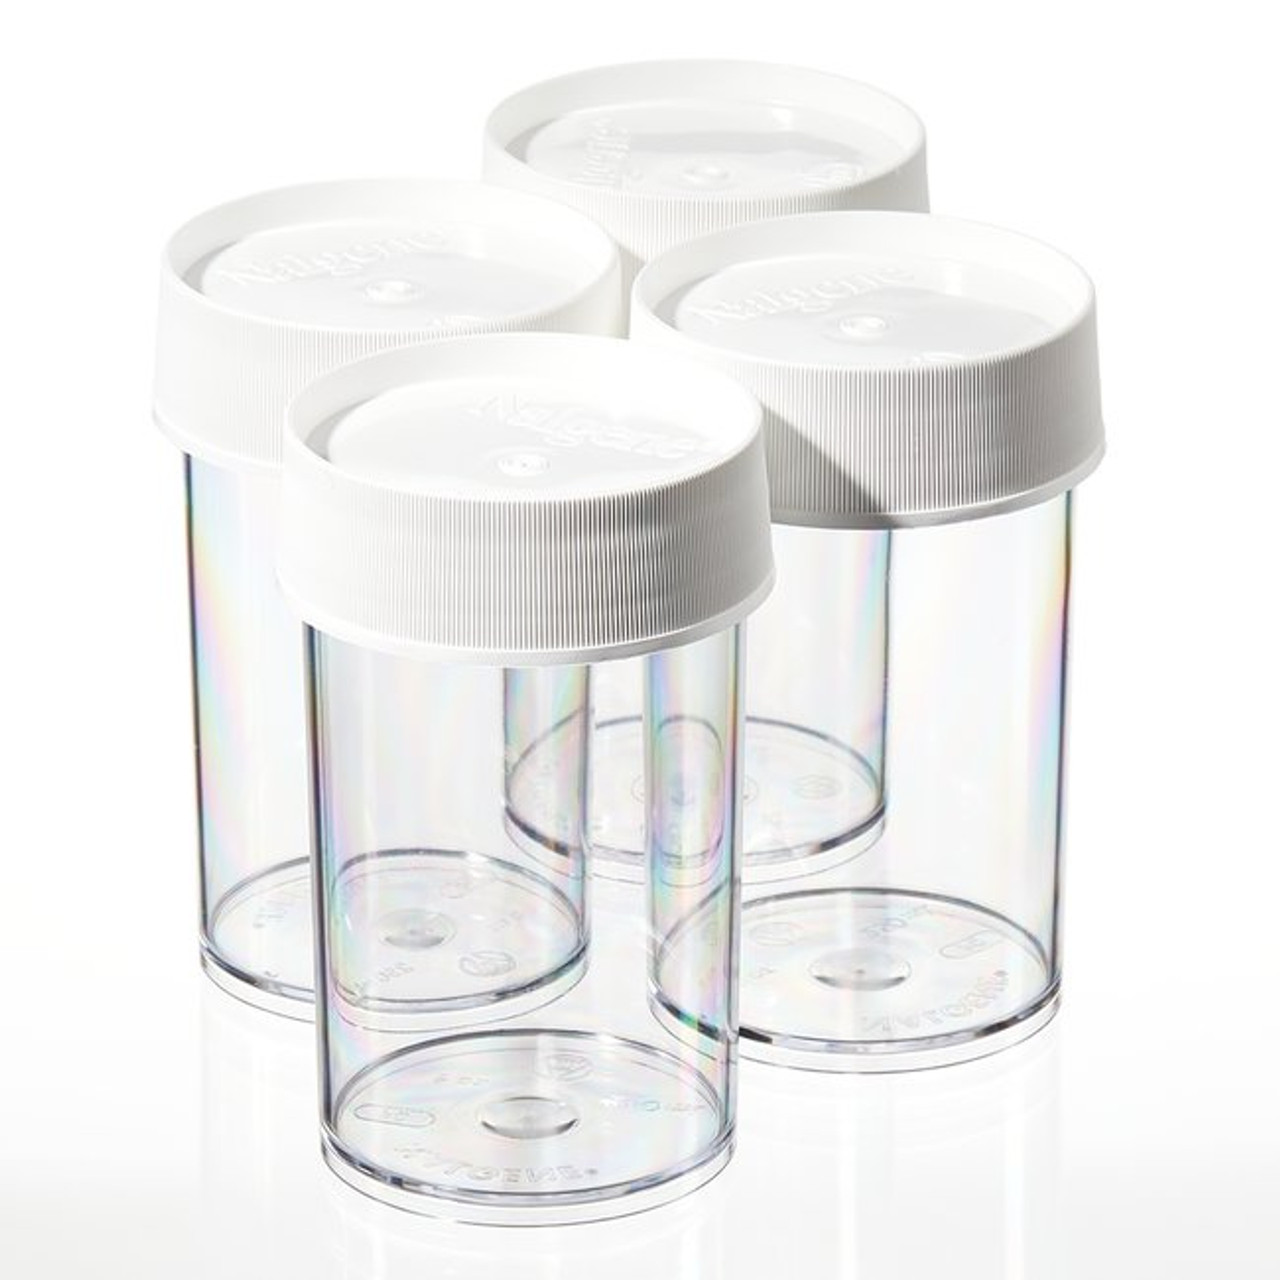 6 oz. Straight Sided Jar - Wholesale Supplies Plus